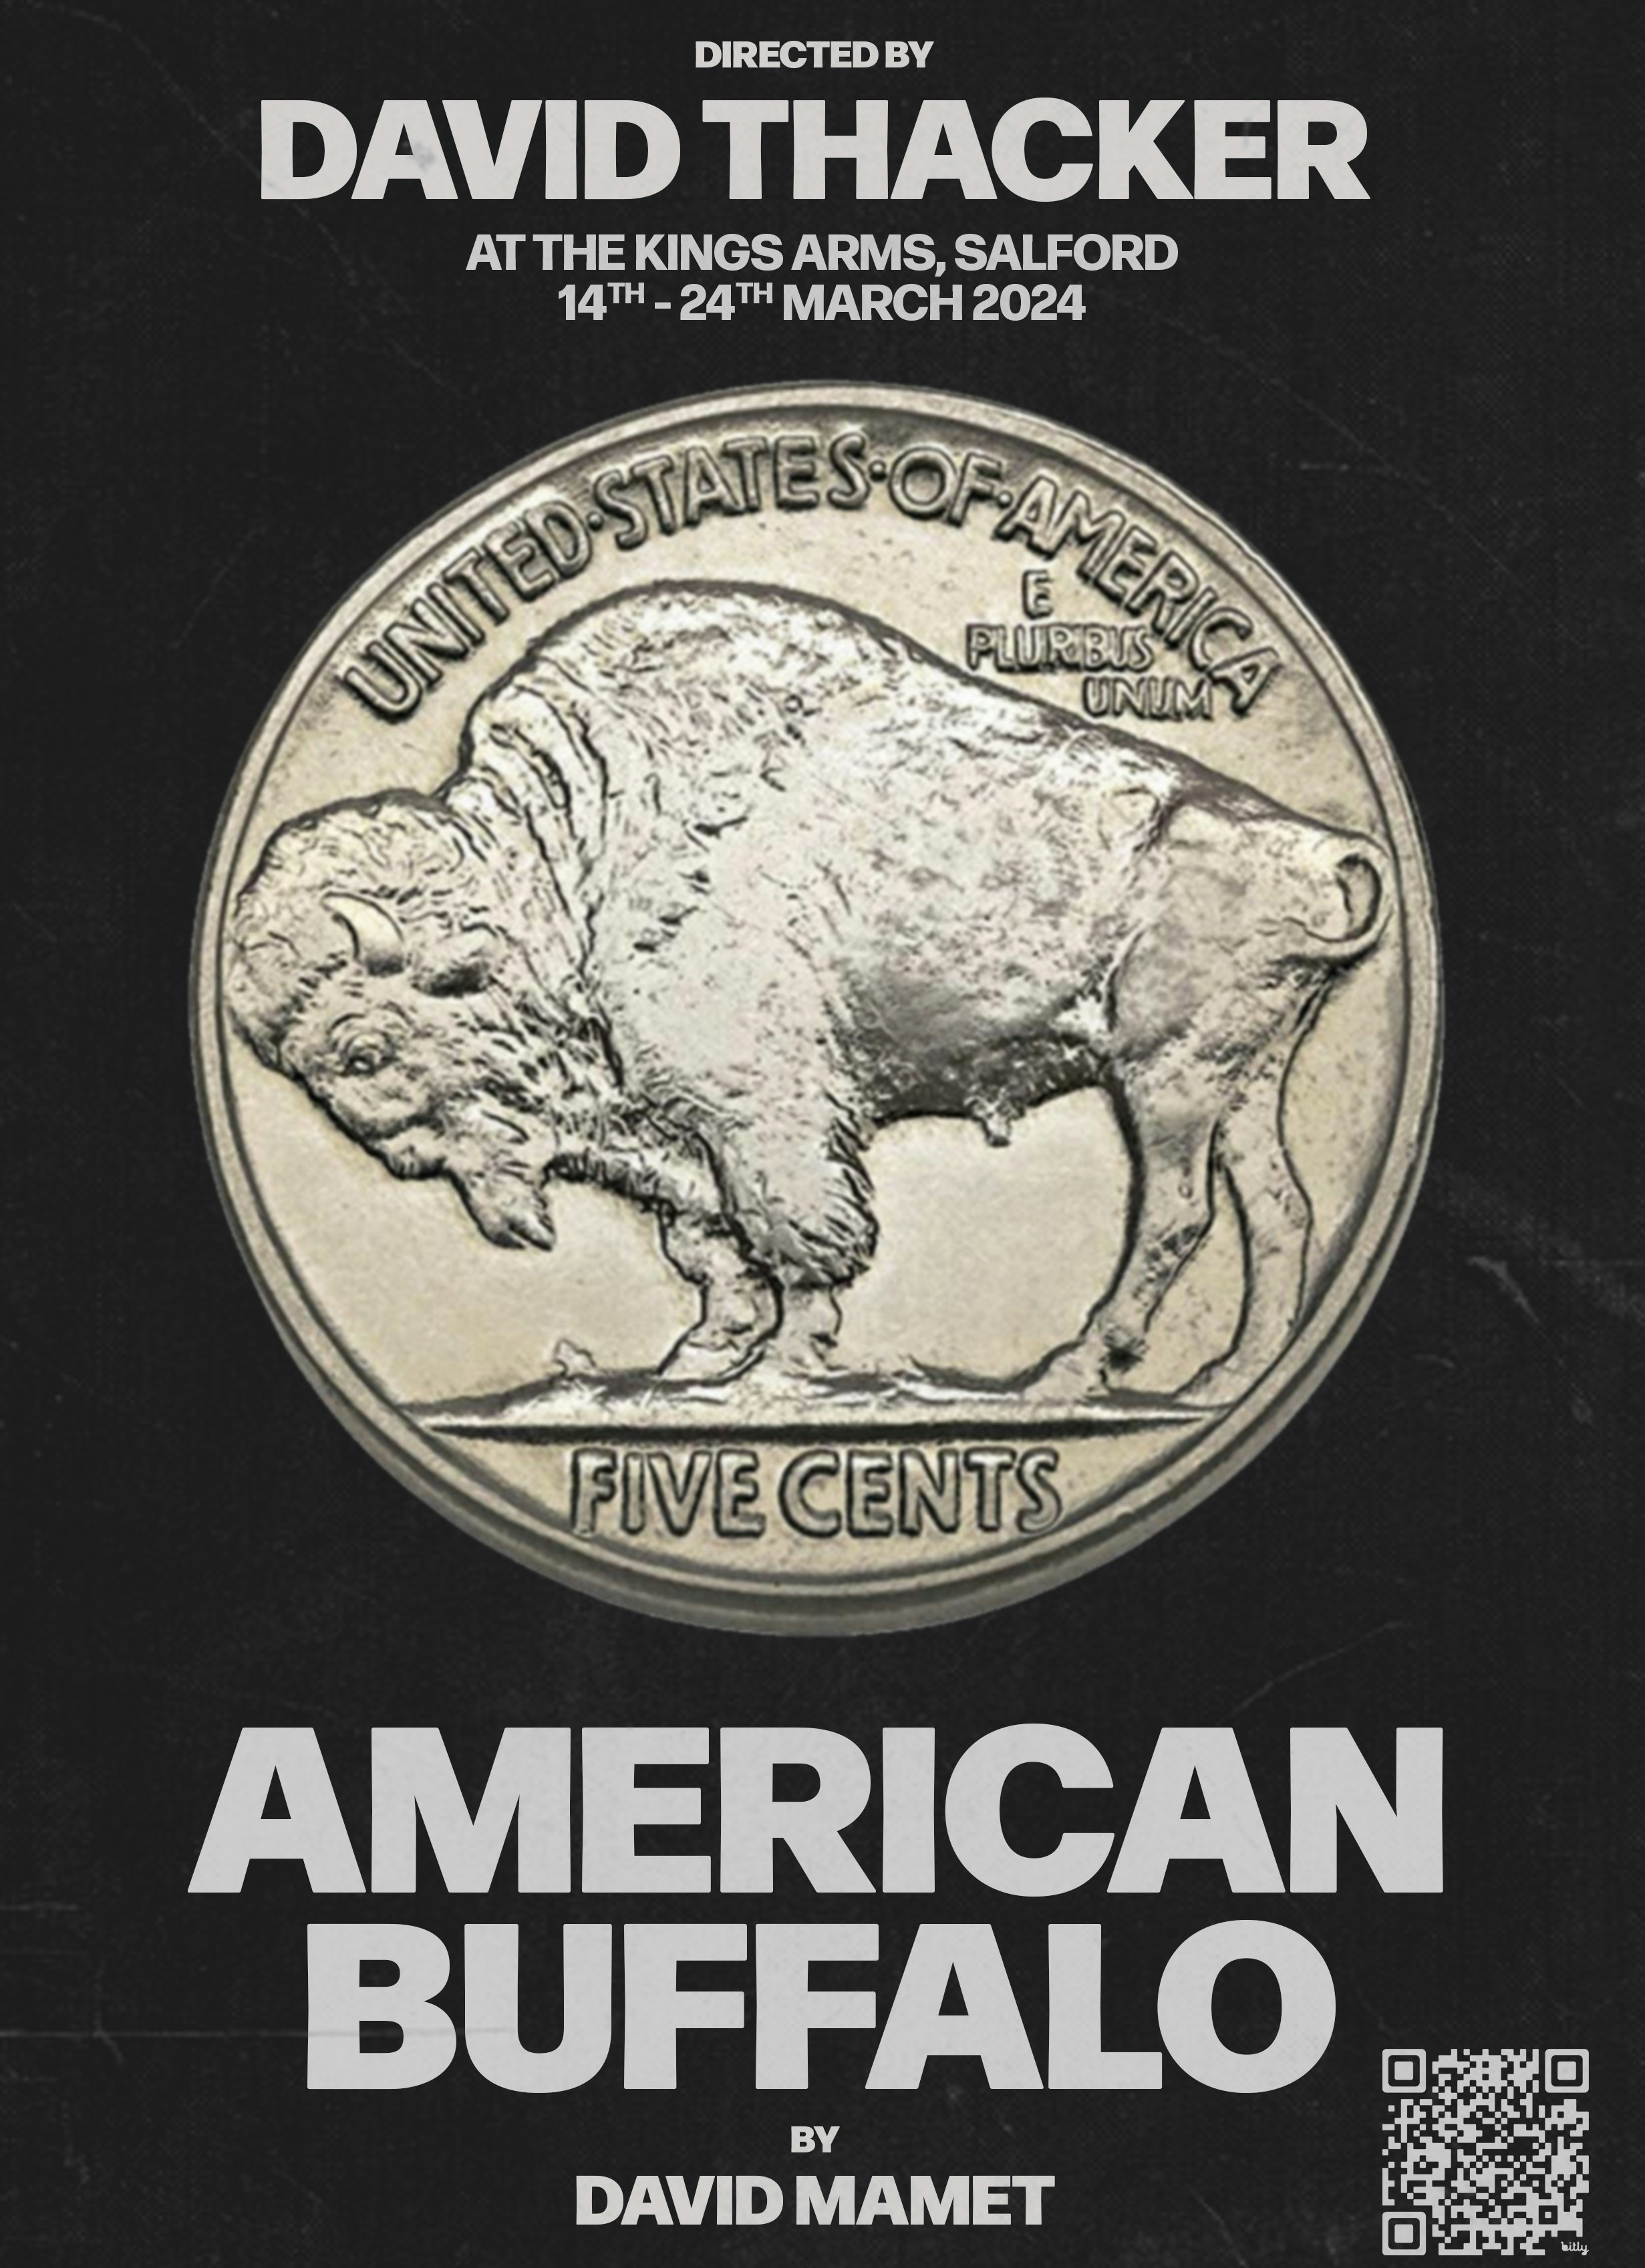 Investigate American Buffalo with David Thacker & 2pm show